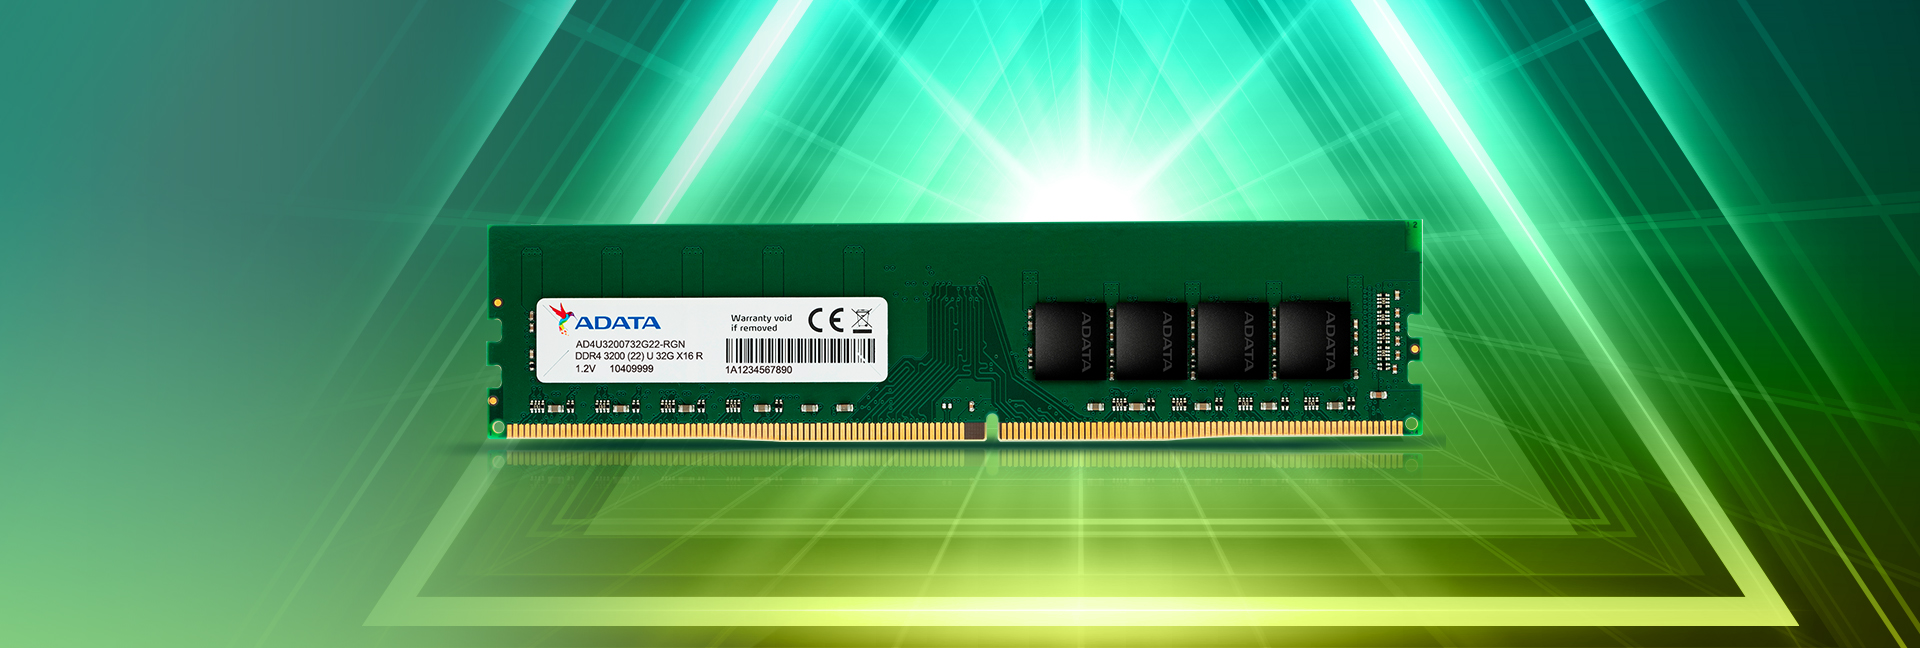 Premier DDR4 3200 U-DIMM RAM Memory | ADATA (Global)